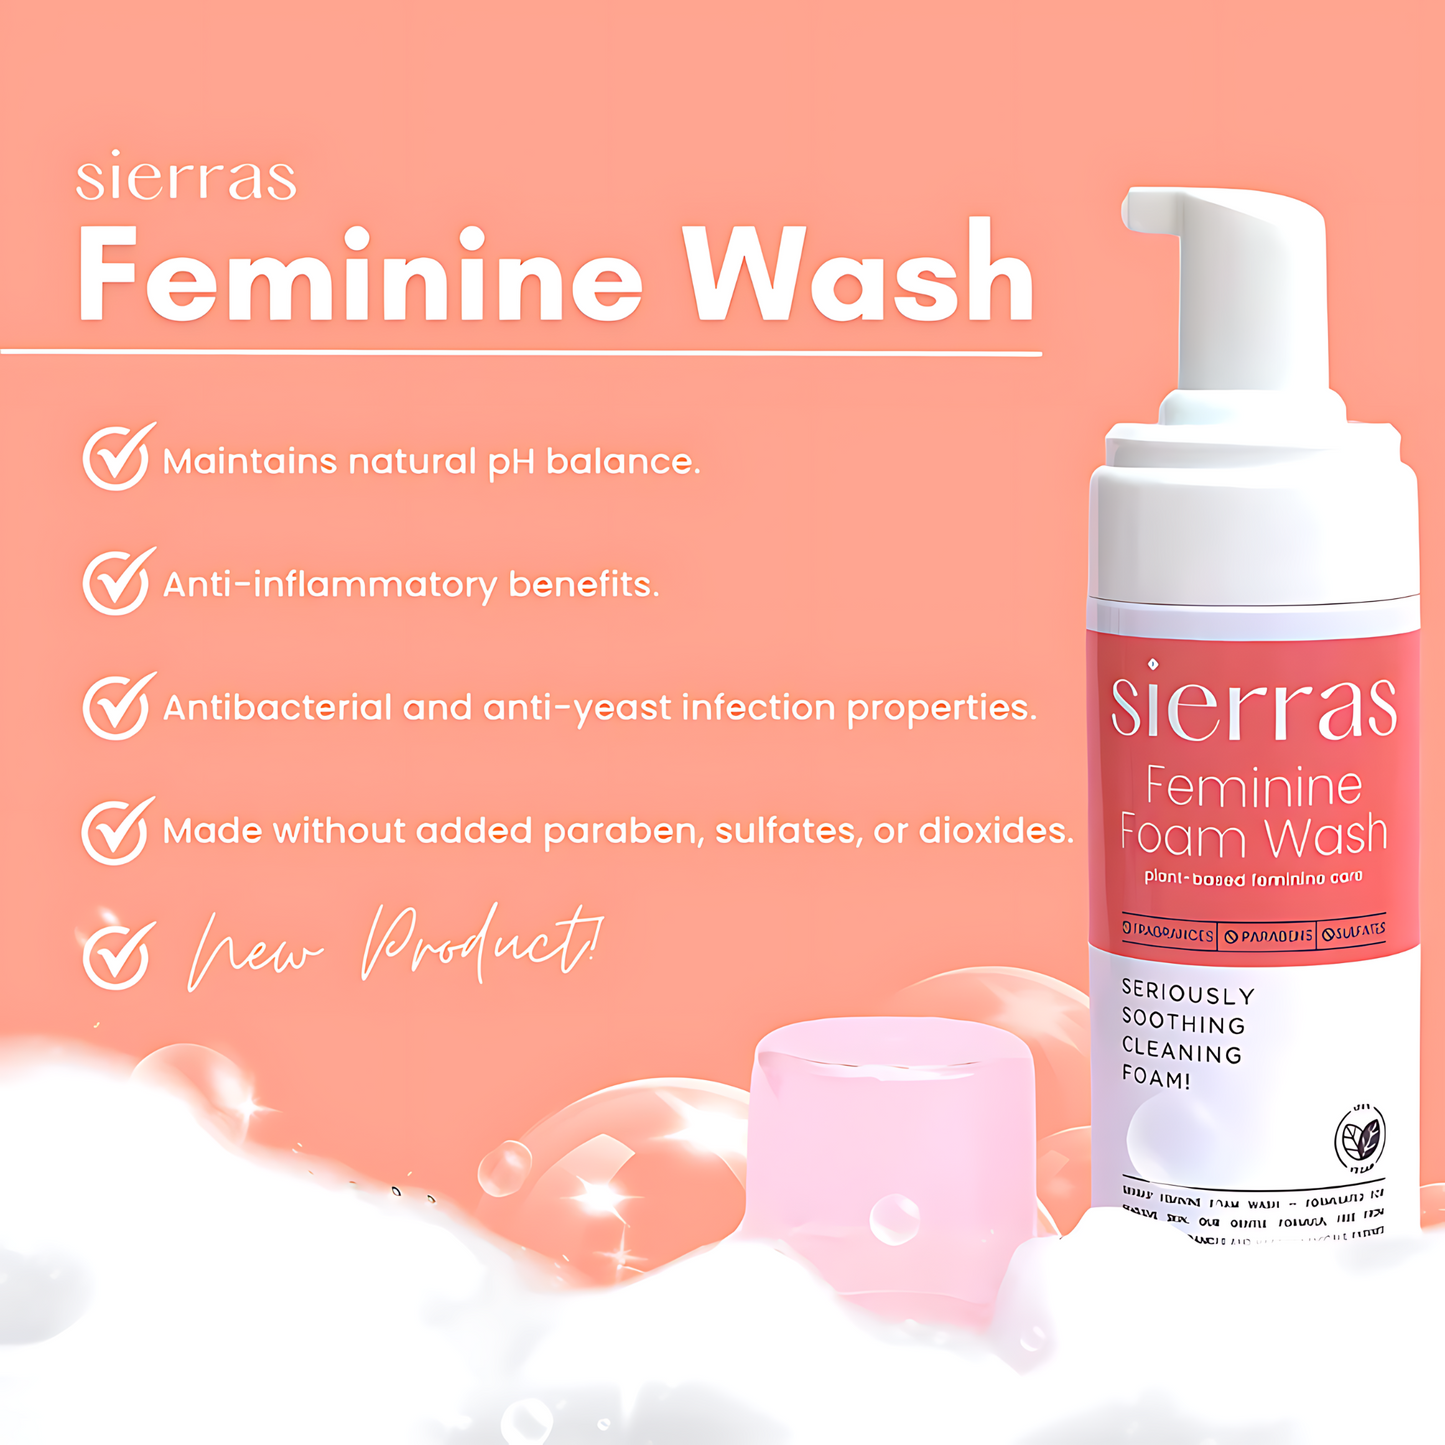 Sierras Feminine Wash 150ml